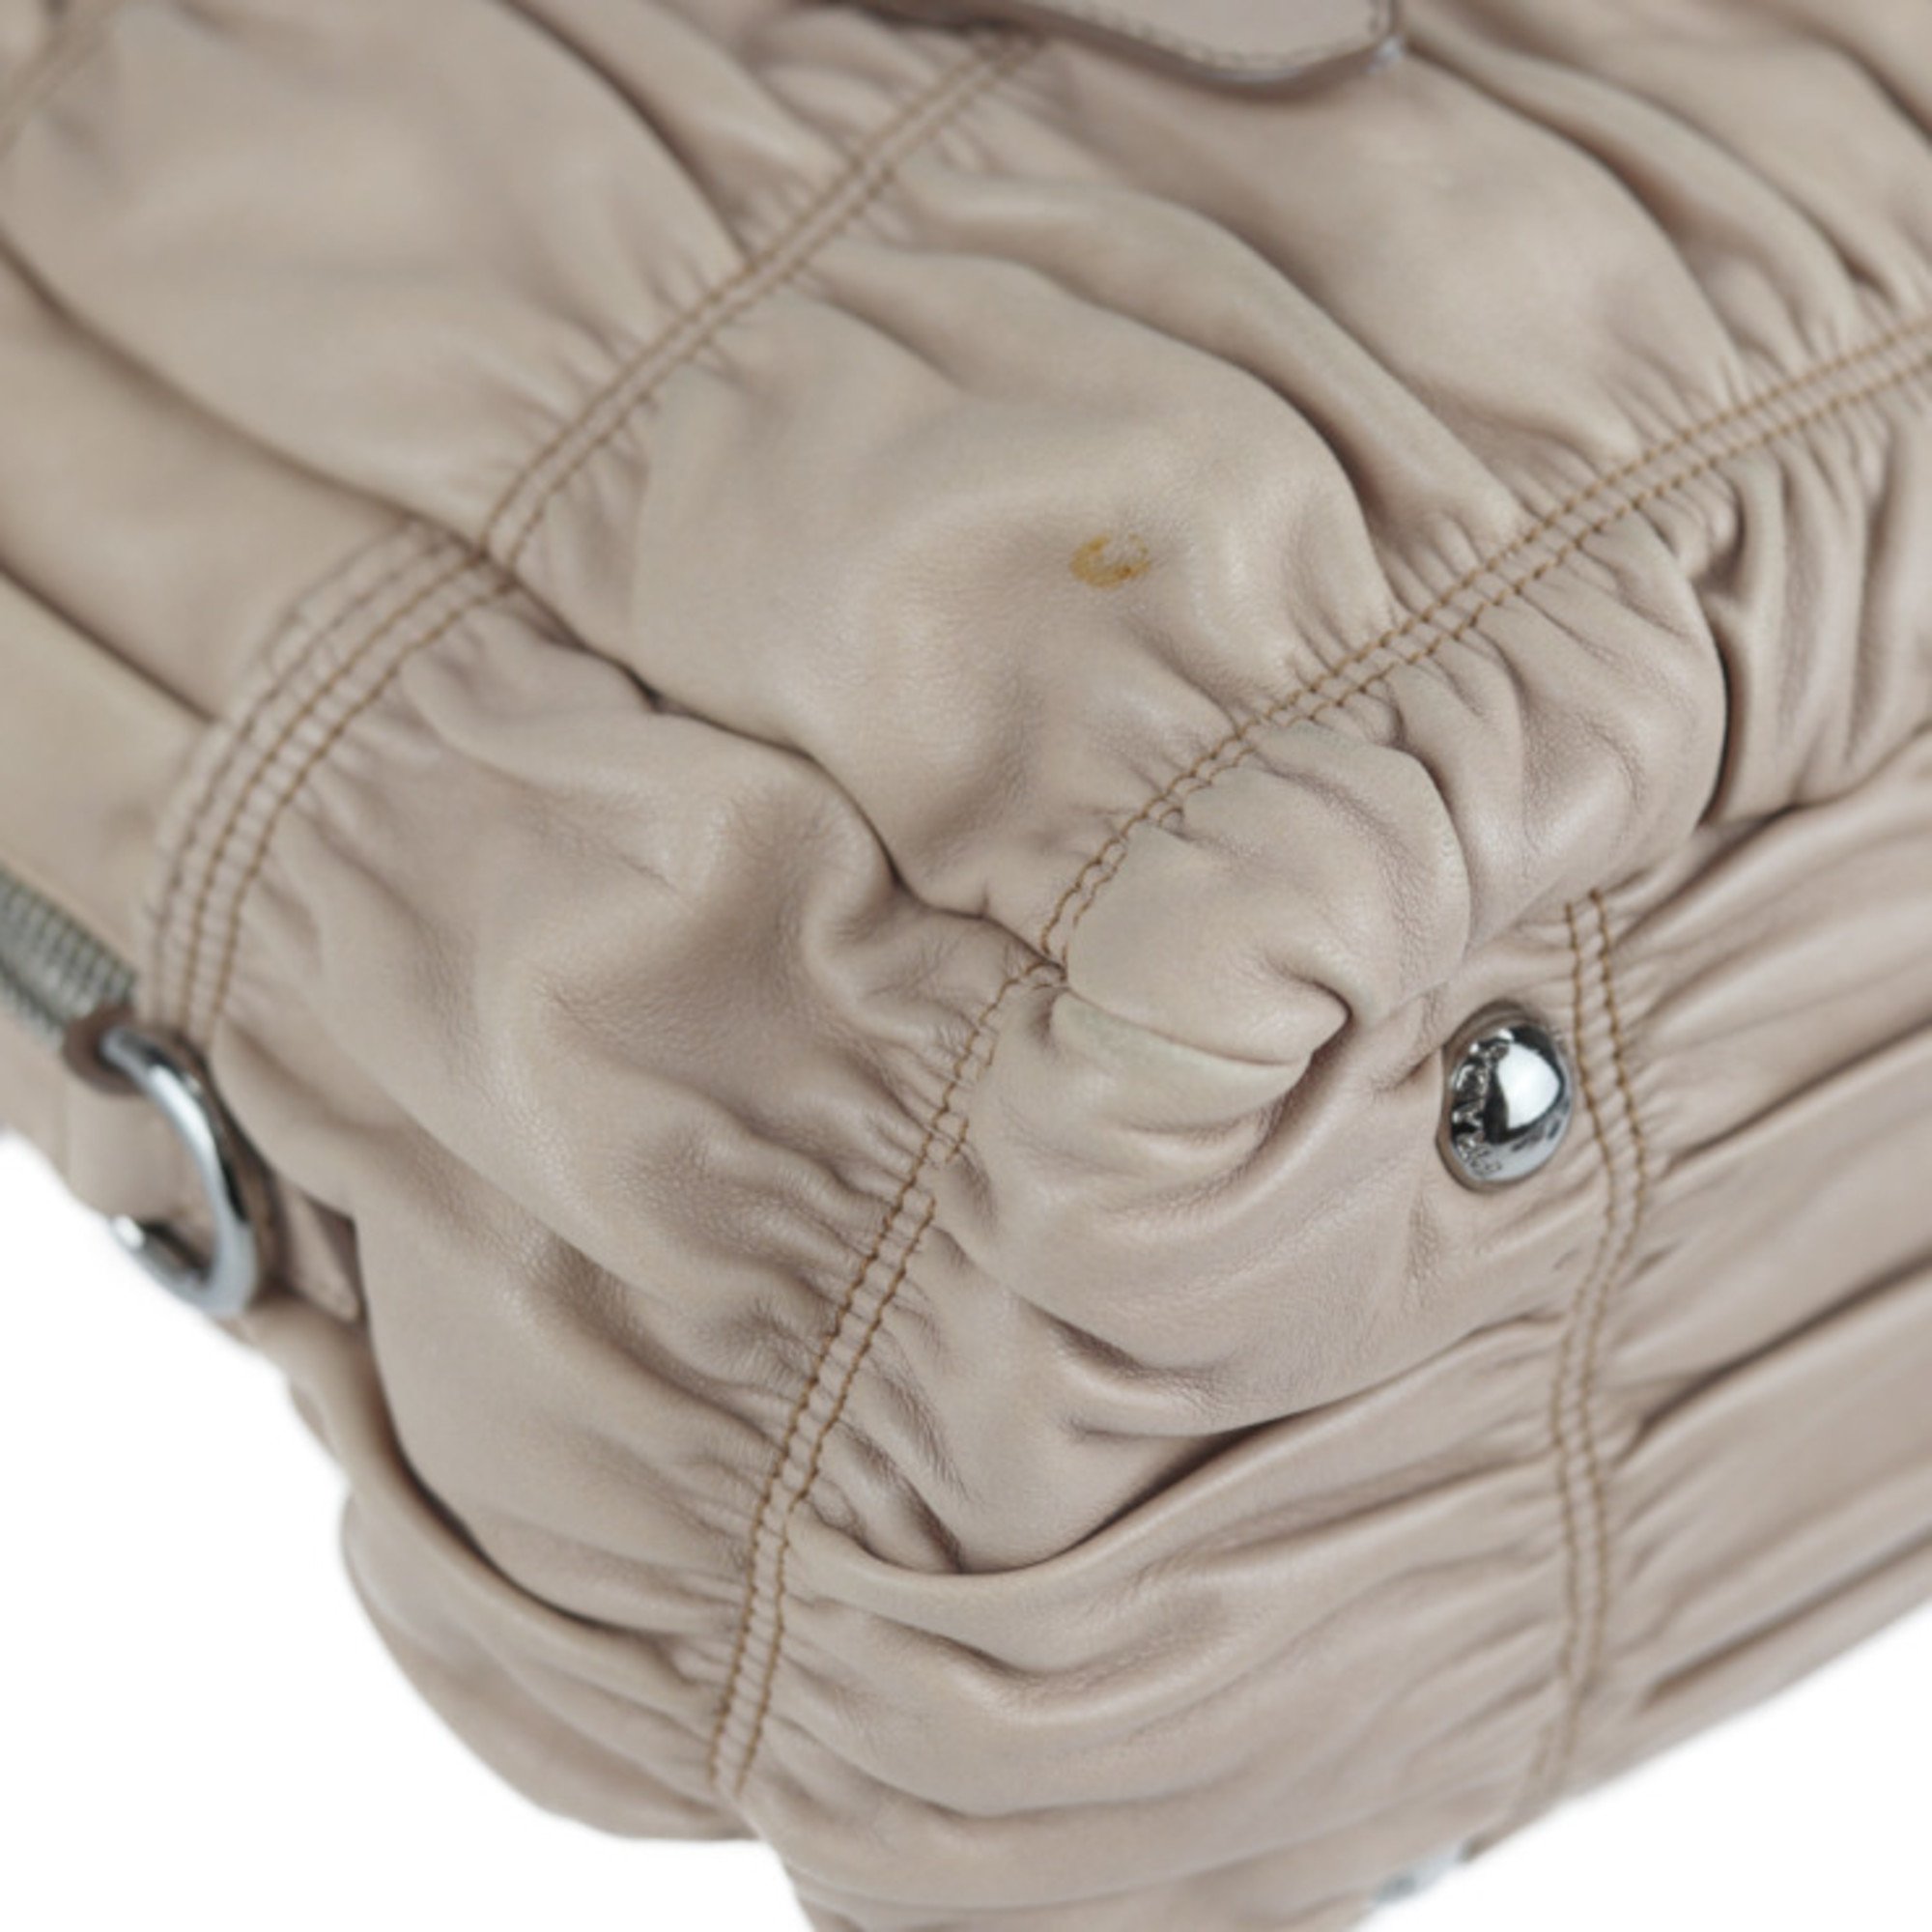 PRADA Prada handbag BL0759 nappa leather CAMMEO beige 2WAY shoulder bag tote gather